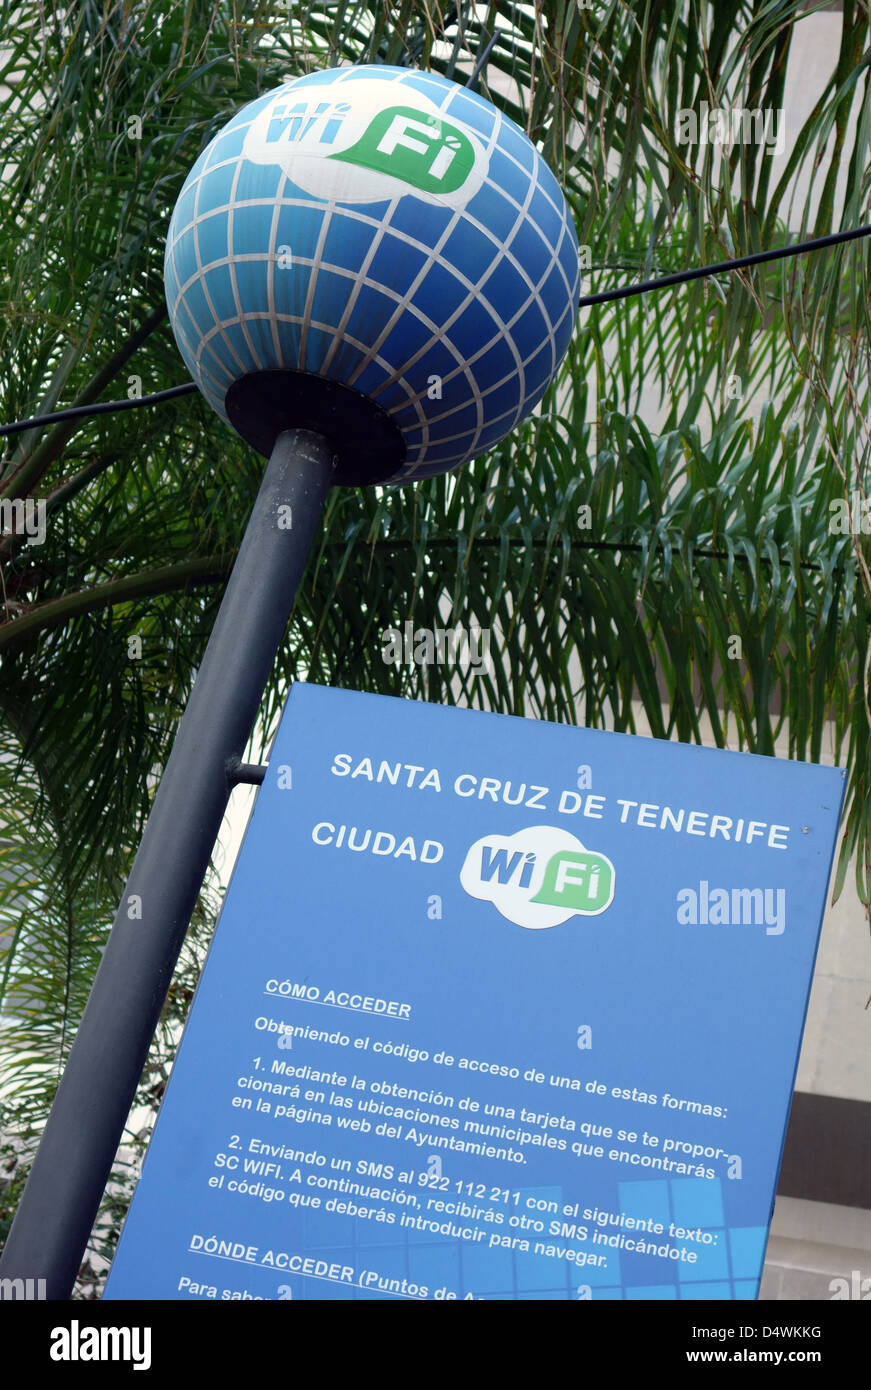 Information on accessing public wi-fi in street in Santa Cruz de Tenerife, Canary Islands Stock Photo